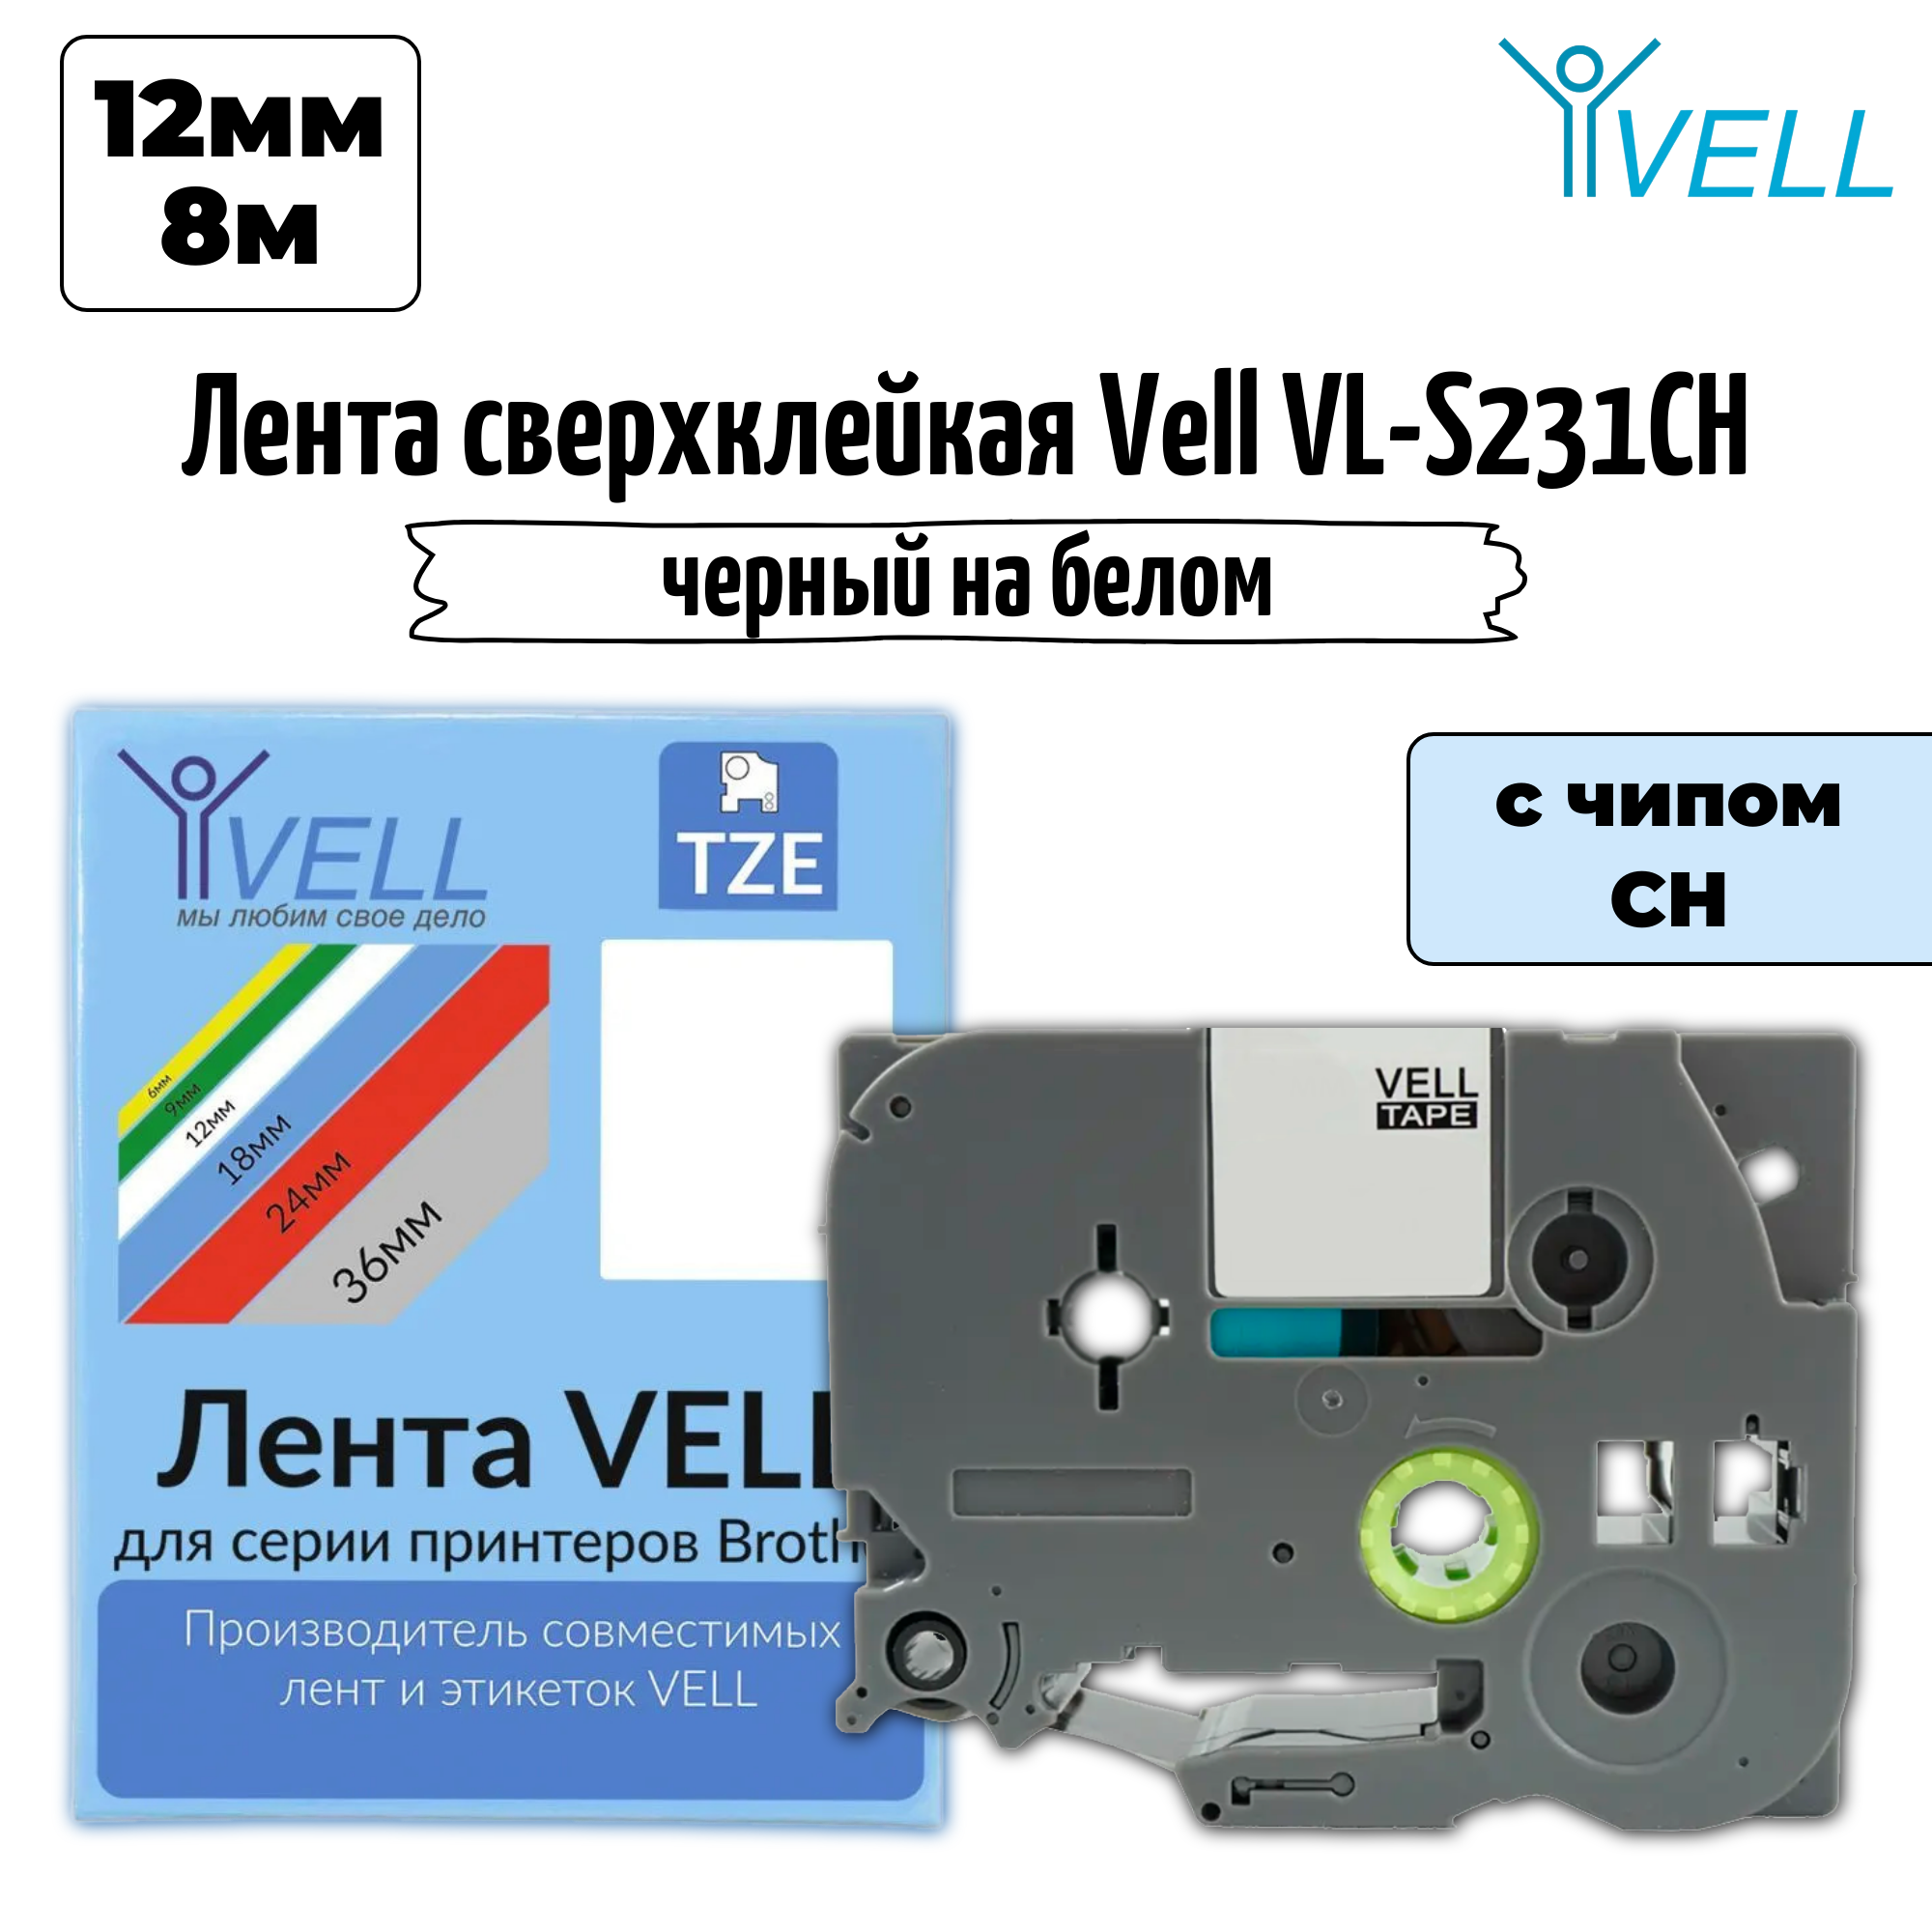 Лента Vell VL-S231CH (с чипом, 12 мм, черный на белом) для Puty PT-100E/100ECH/Brother D200/E110/ D600/E300/P700/E550/P900 {Vell-S231CH}